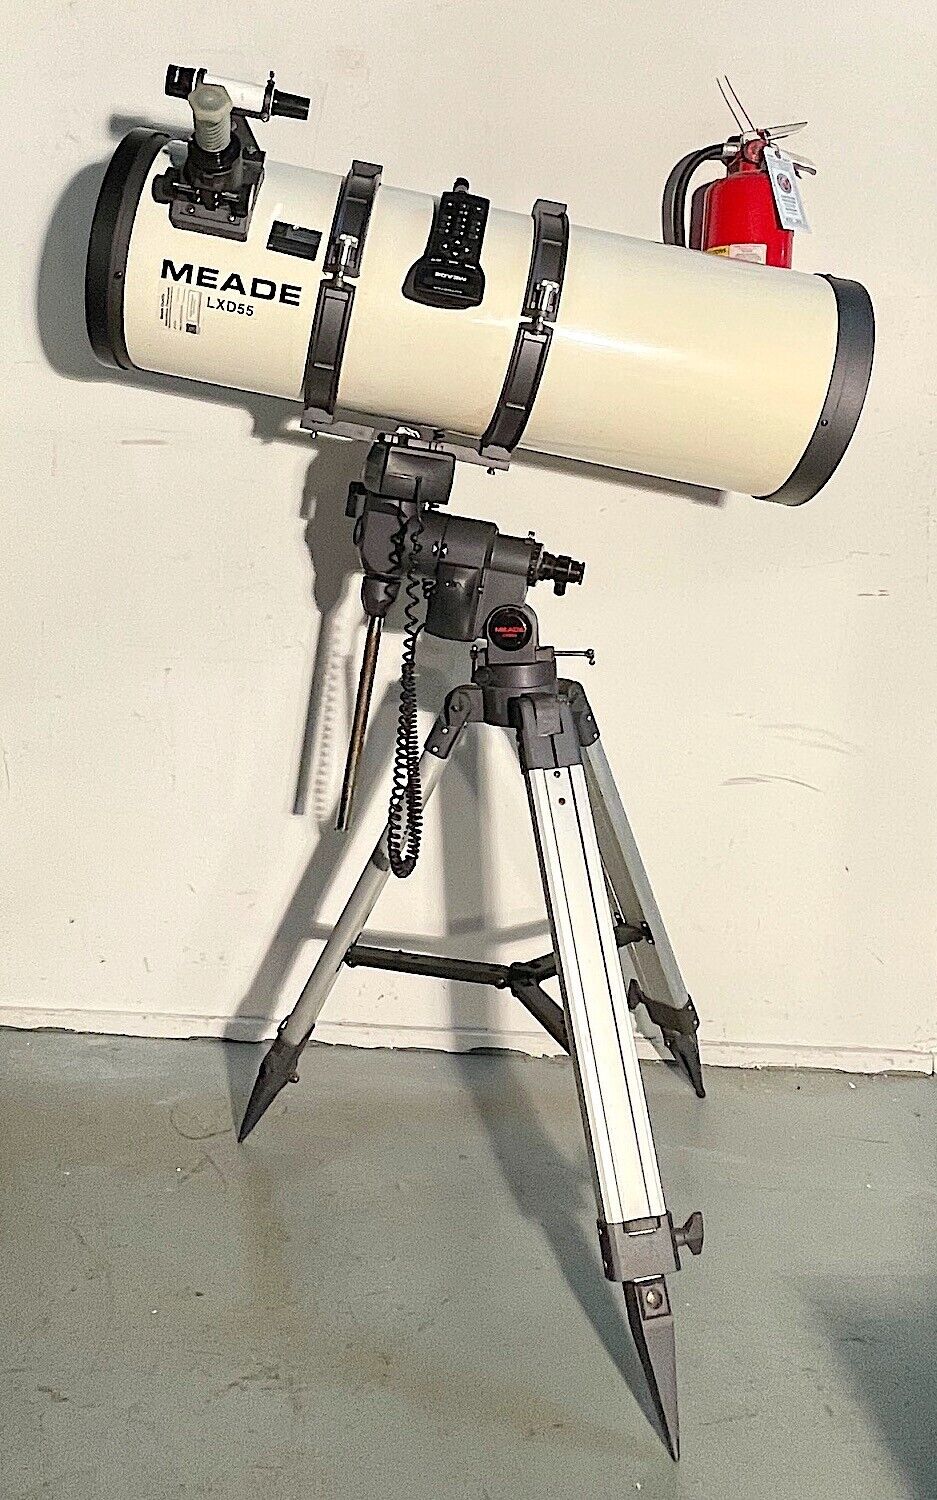 Meade LXD55, Schmidt Newtonian Telescope, item has not been tested, LOCAL PICKUP